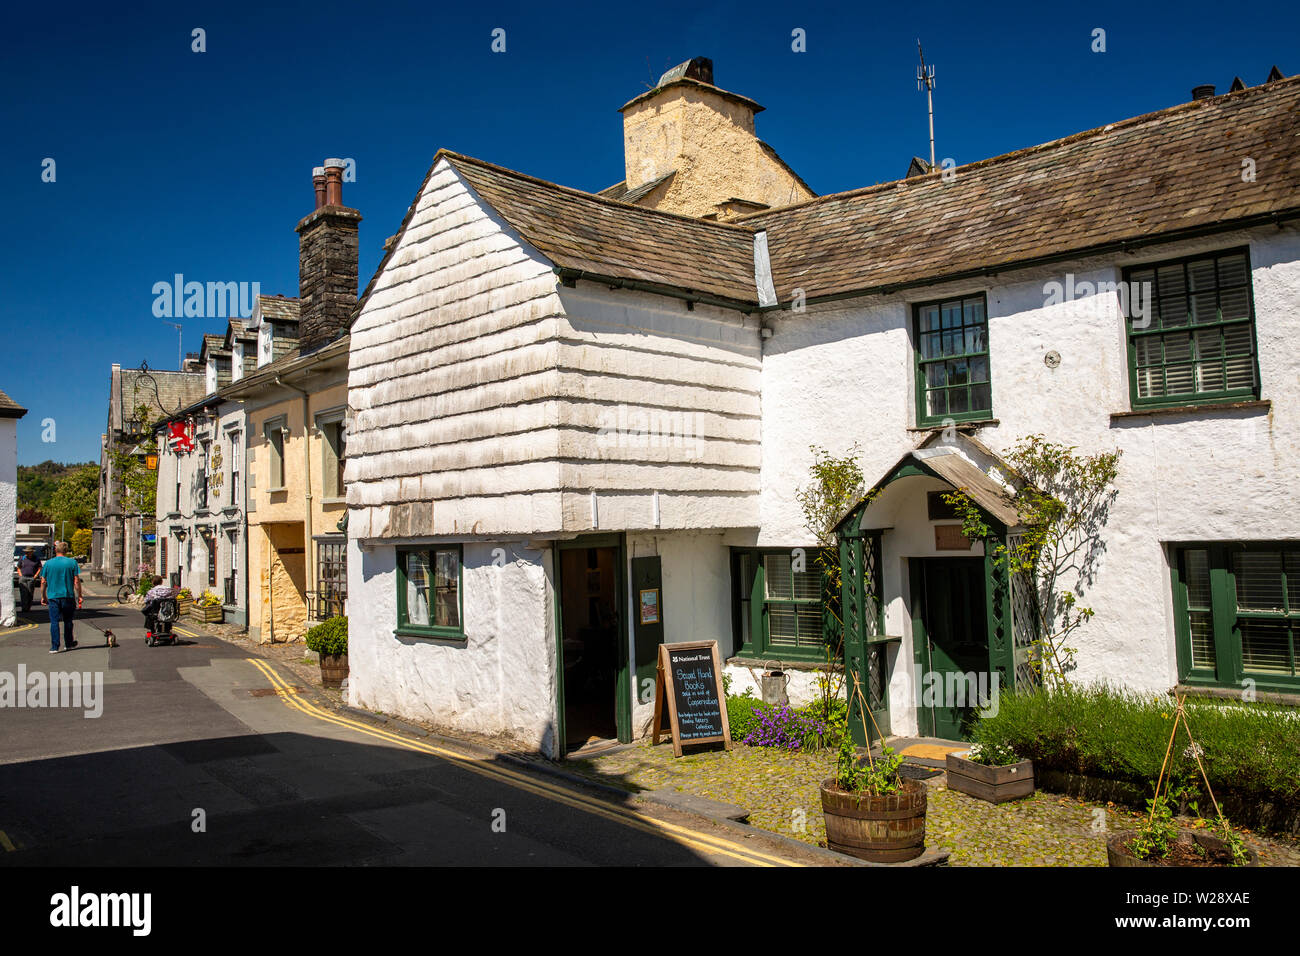 UK, Cumbria, Hawkshead, Main Street, National Trust bookshop in old painted slate-hung property Stock Photo